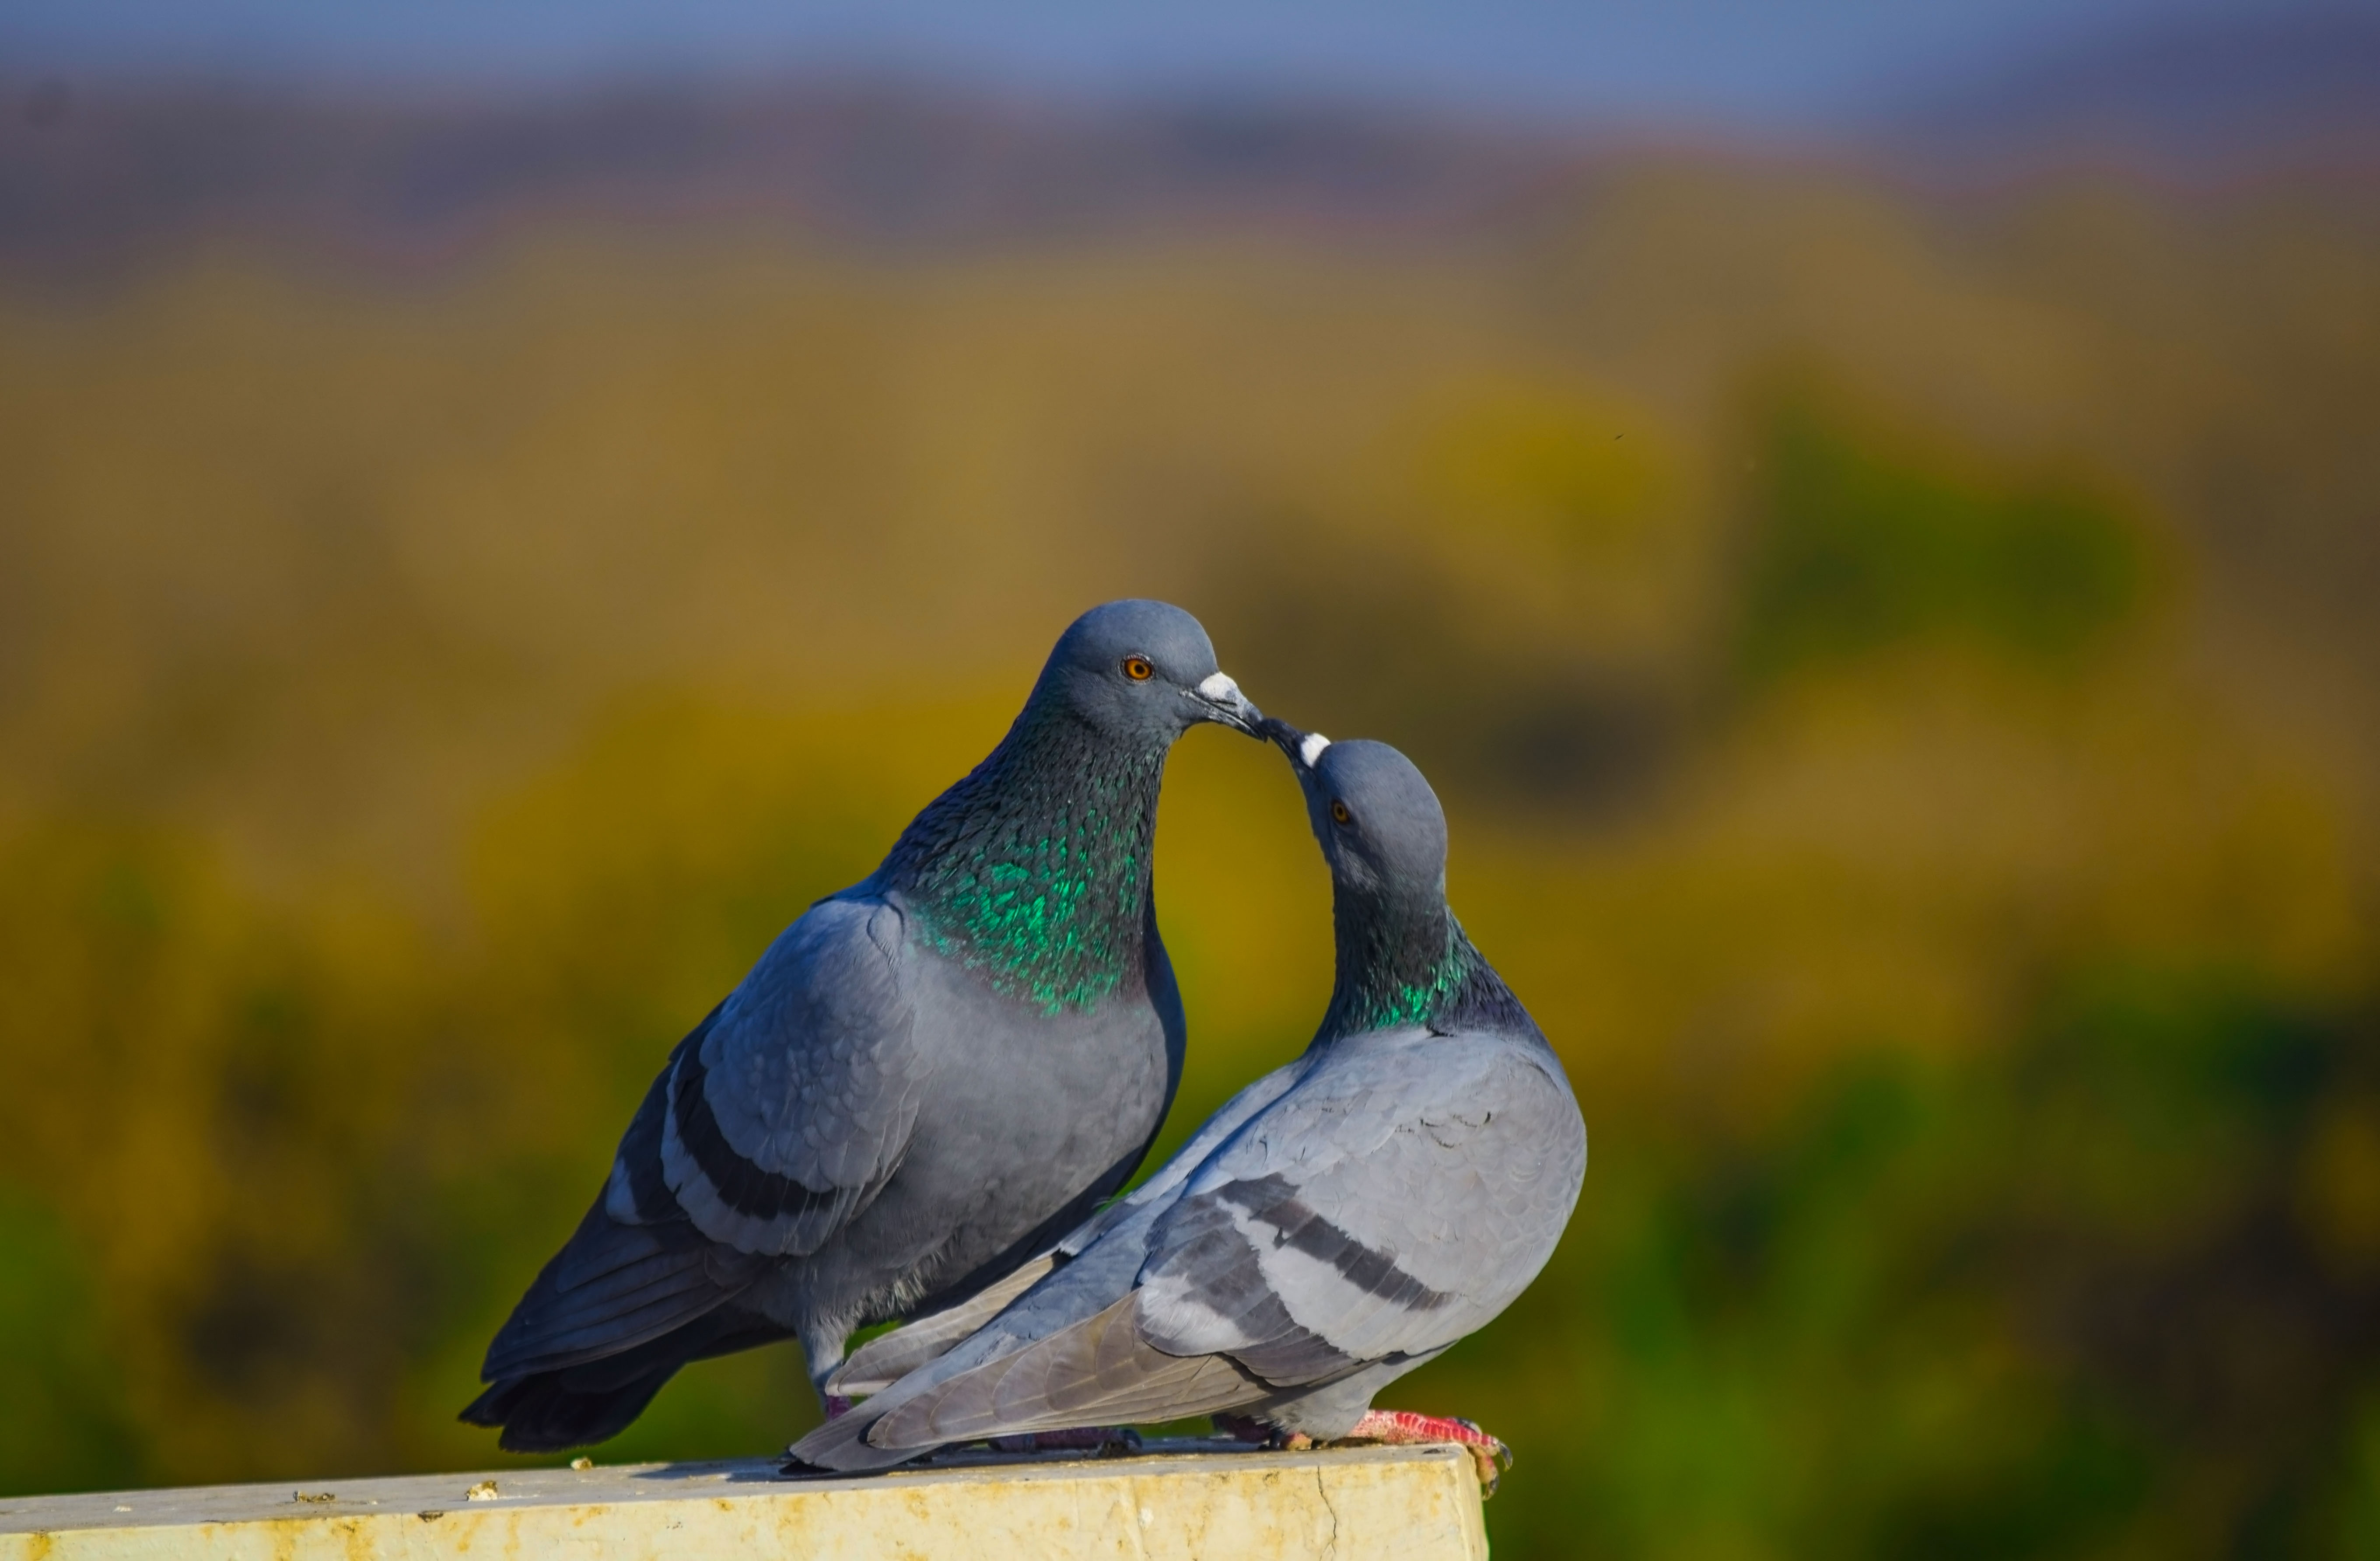 File:Feral Rock Pigeon Couple.jpg - Wikimedia Commons